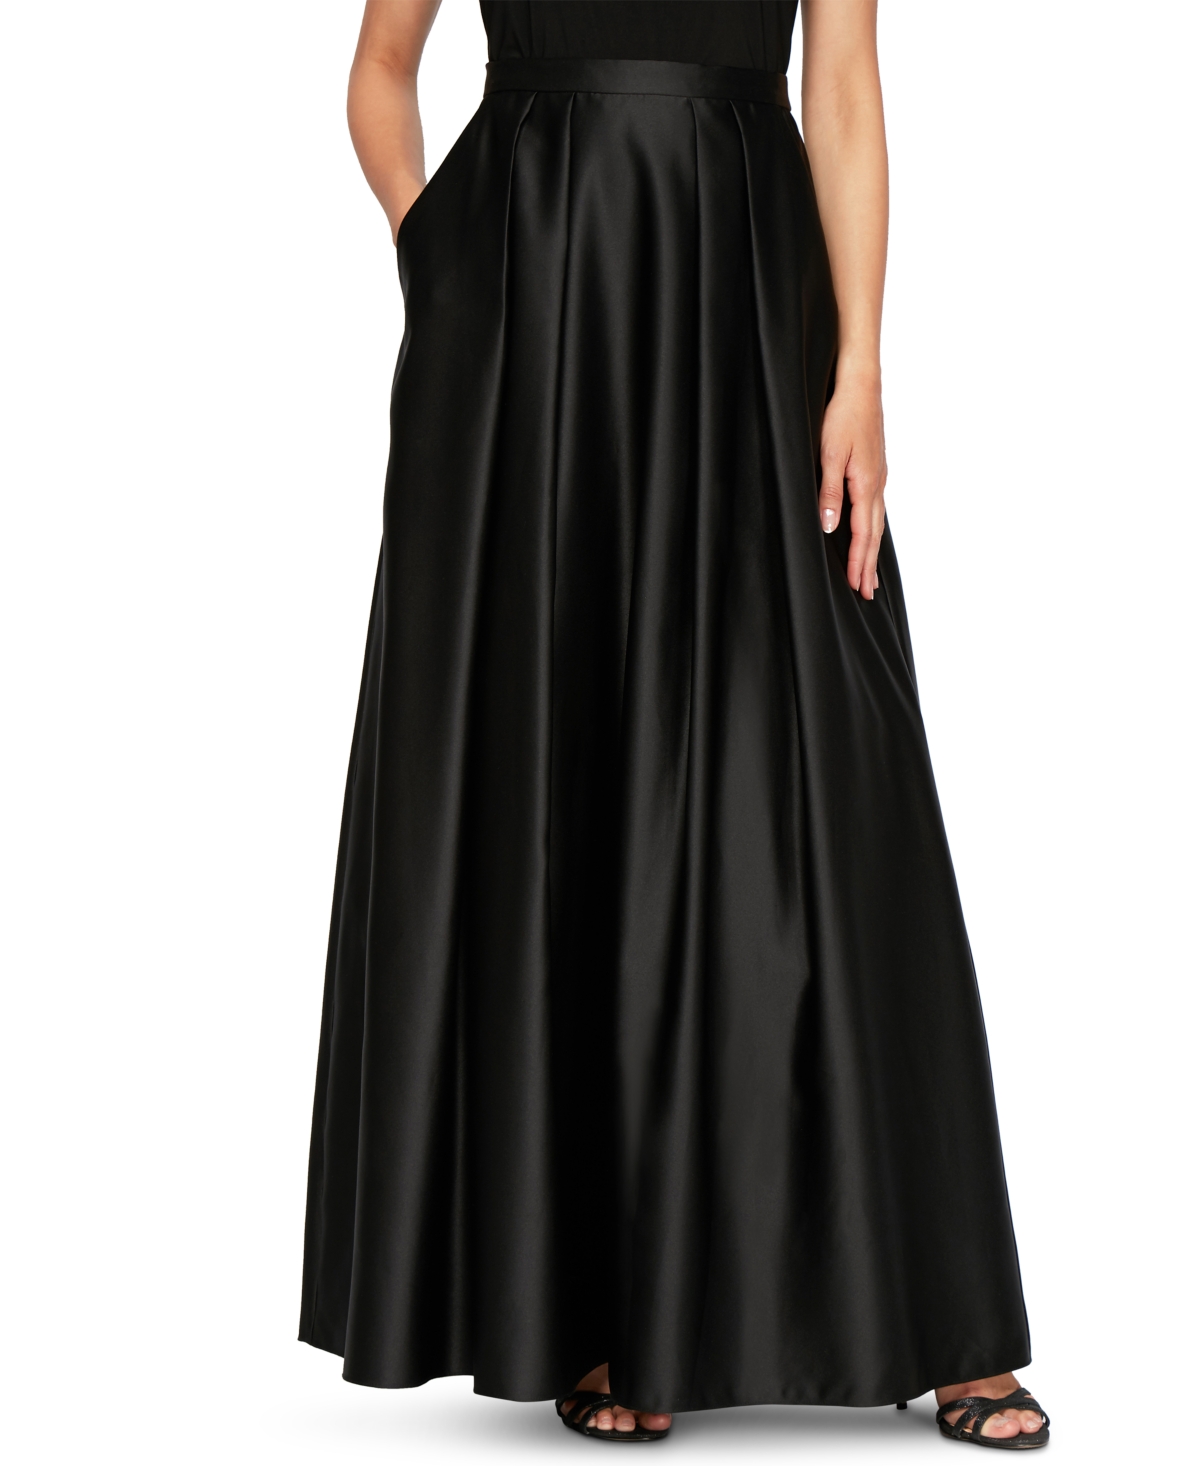 1950s Formal Dresses & Evening Gowns to Buy Alex Evenings Pocketed Ballgown Skirt - Black $119.00 AT vintagedancer.com